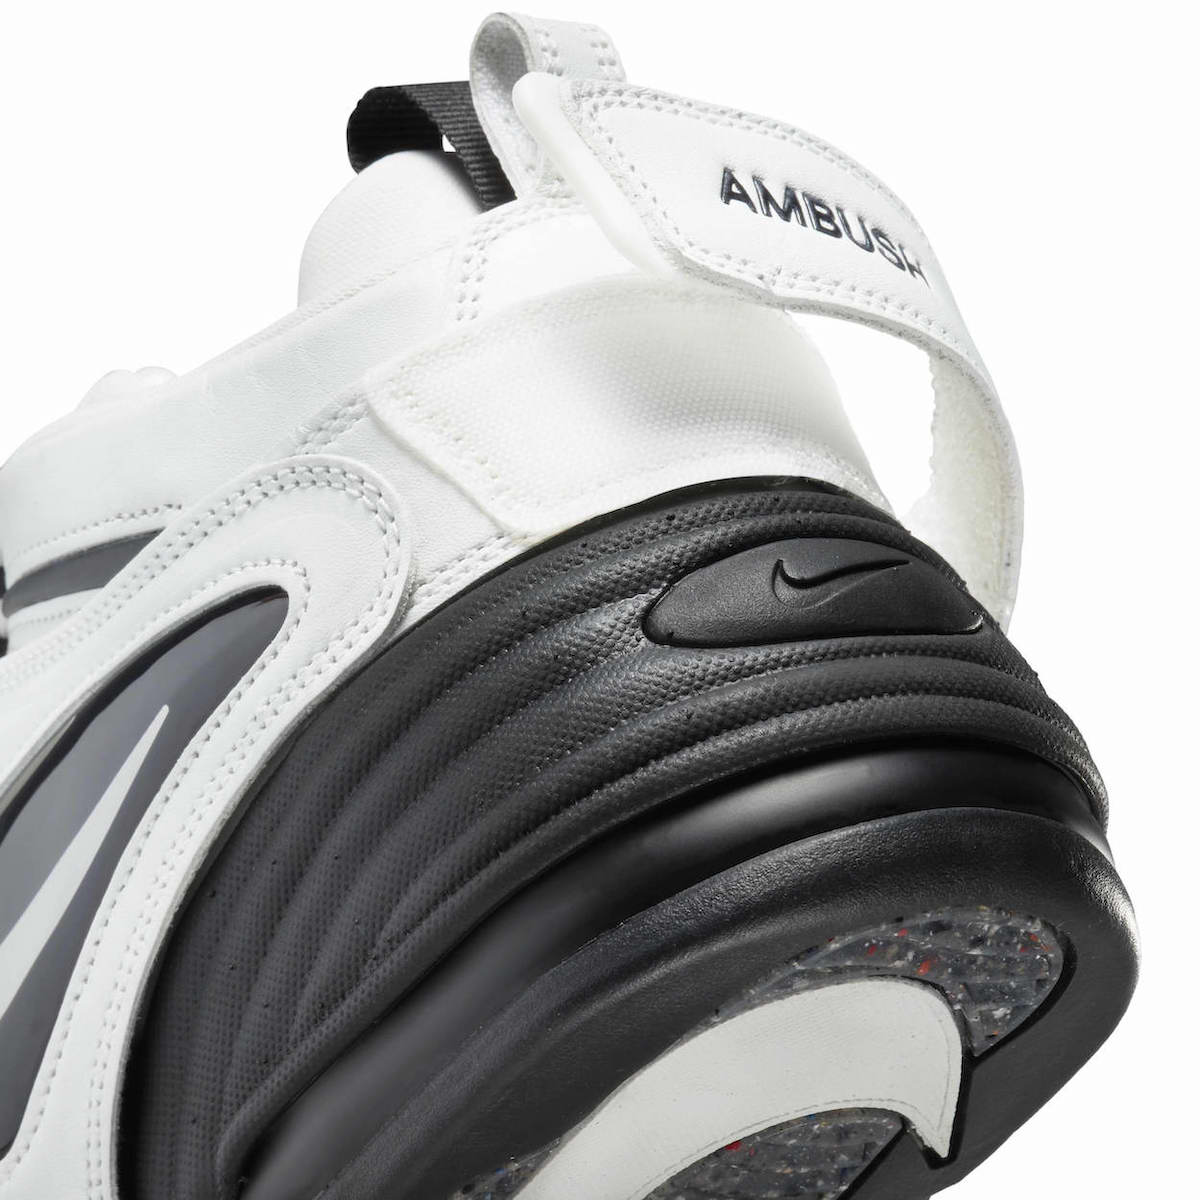 AMBUSH Nike Air Adjust Force White DM8465-100 Release Date